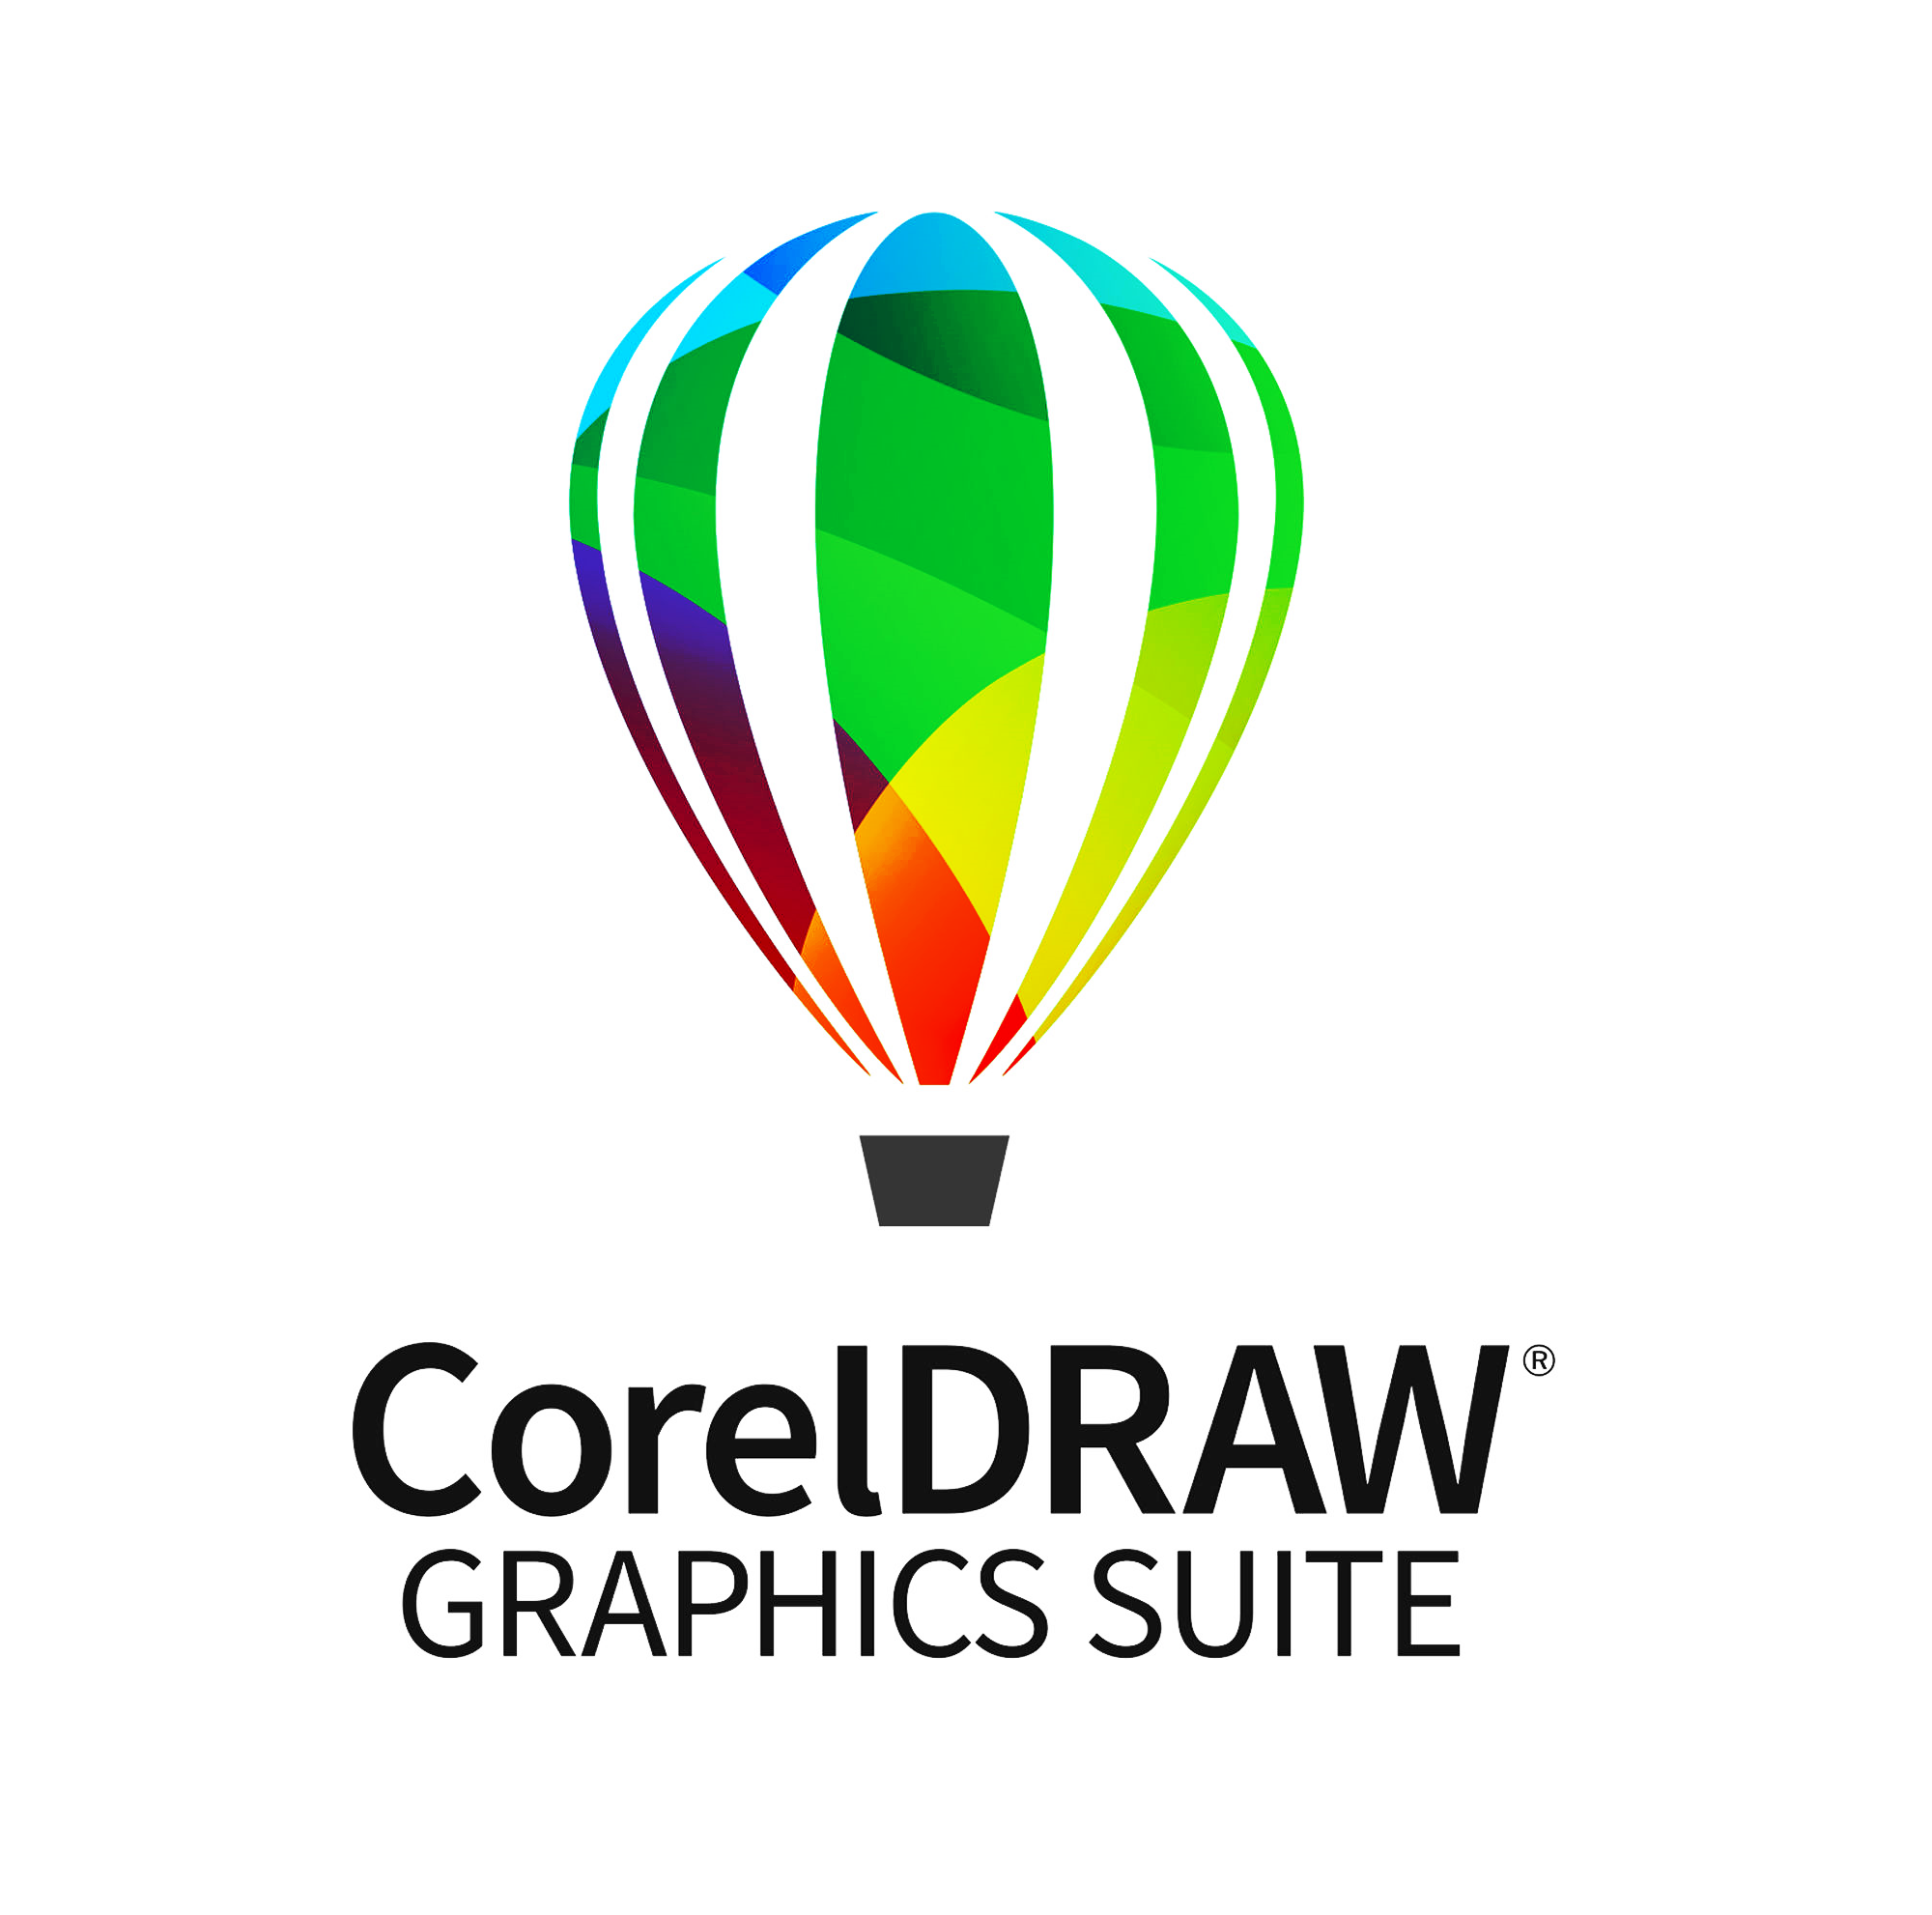 CorelDRAW Graphics Suite 2020 v22.2.0.532 (x64) + Crack Free Download